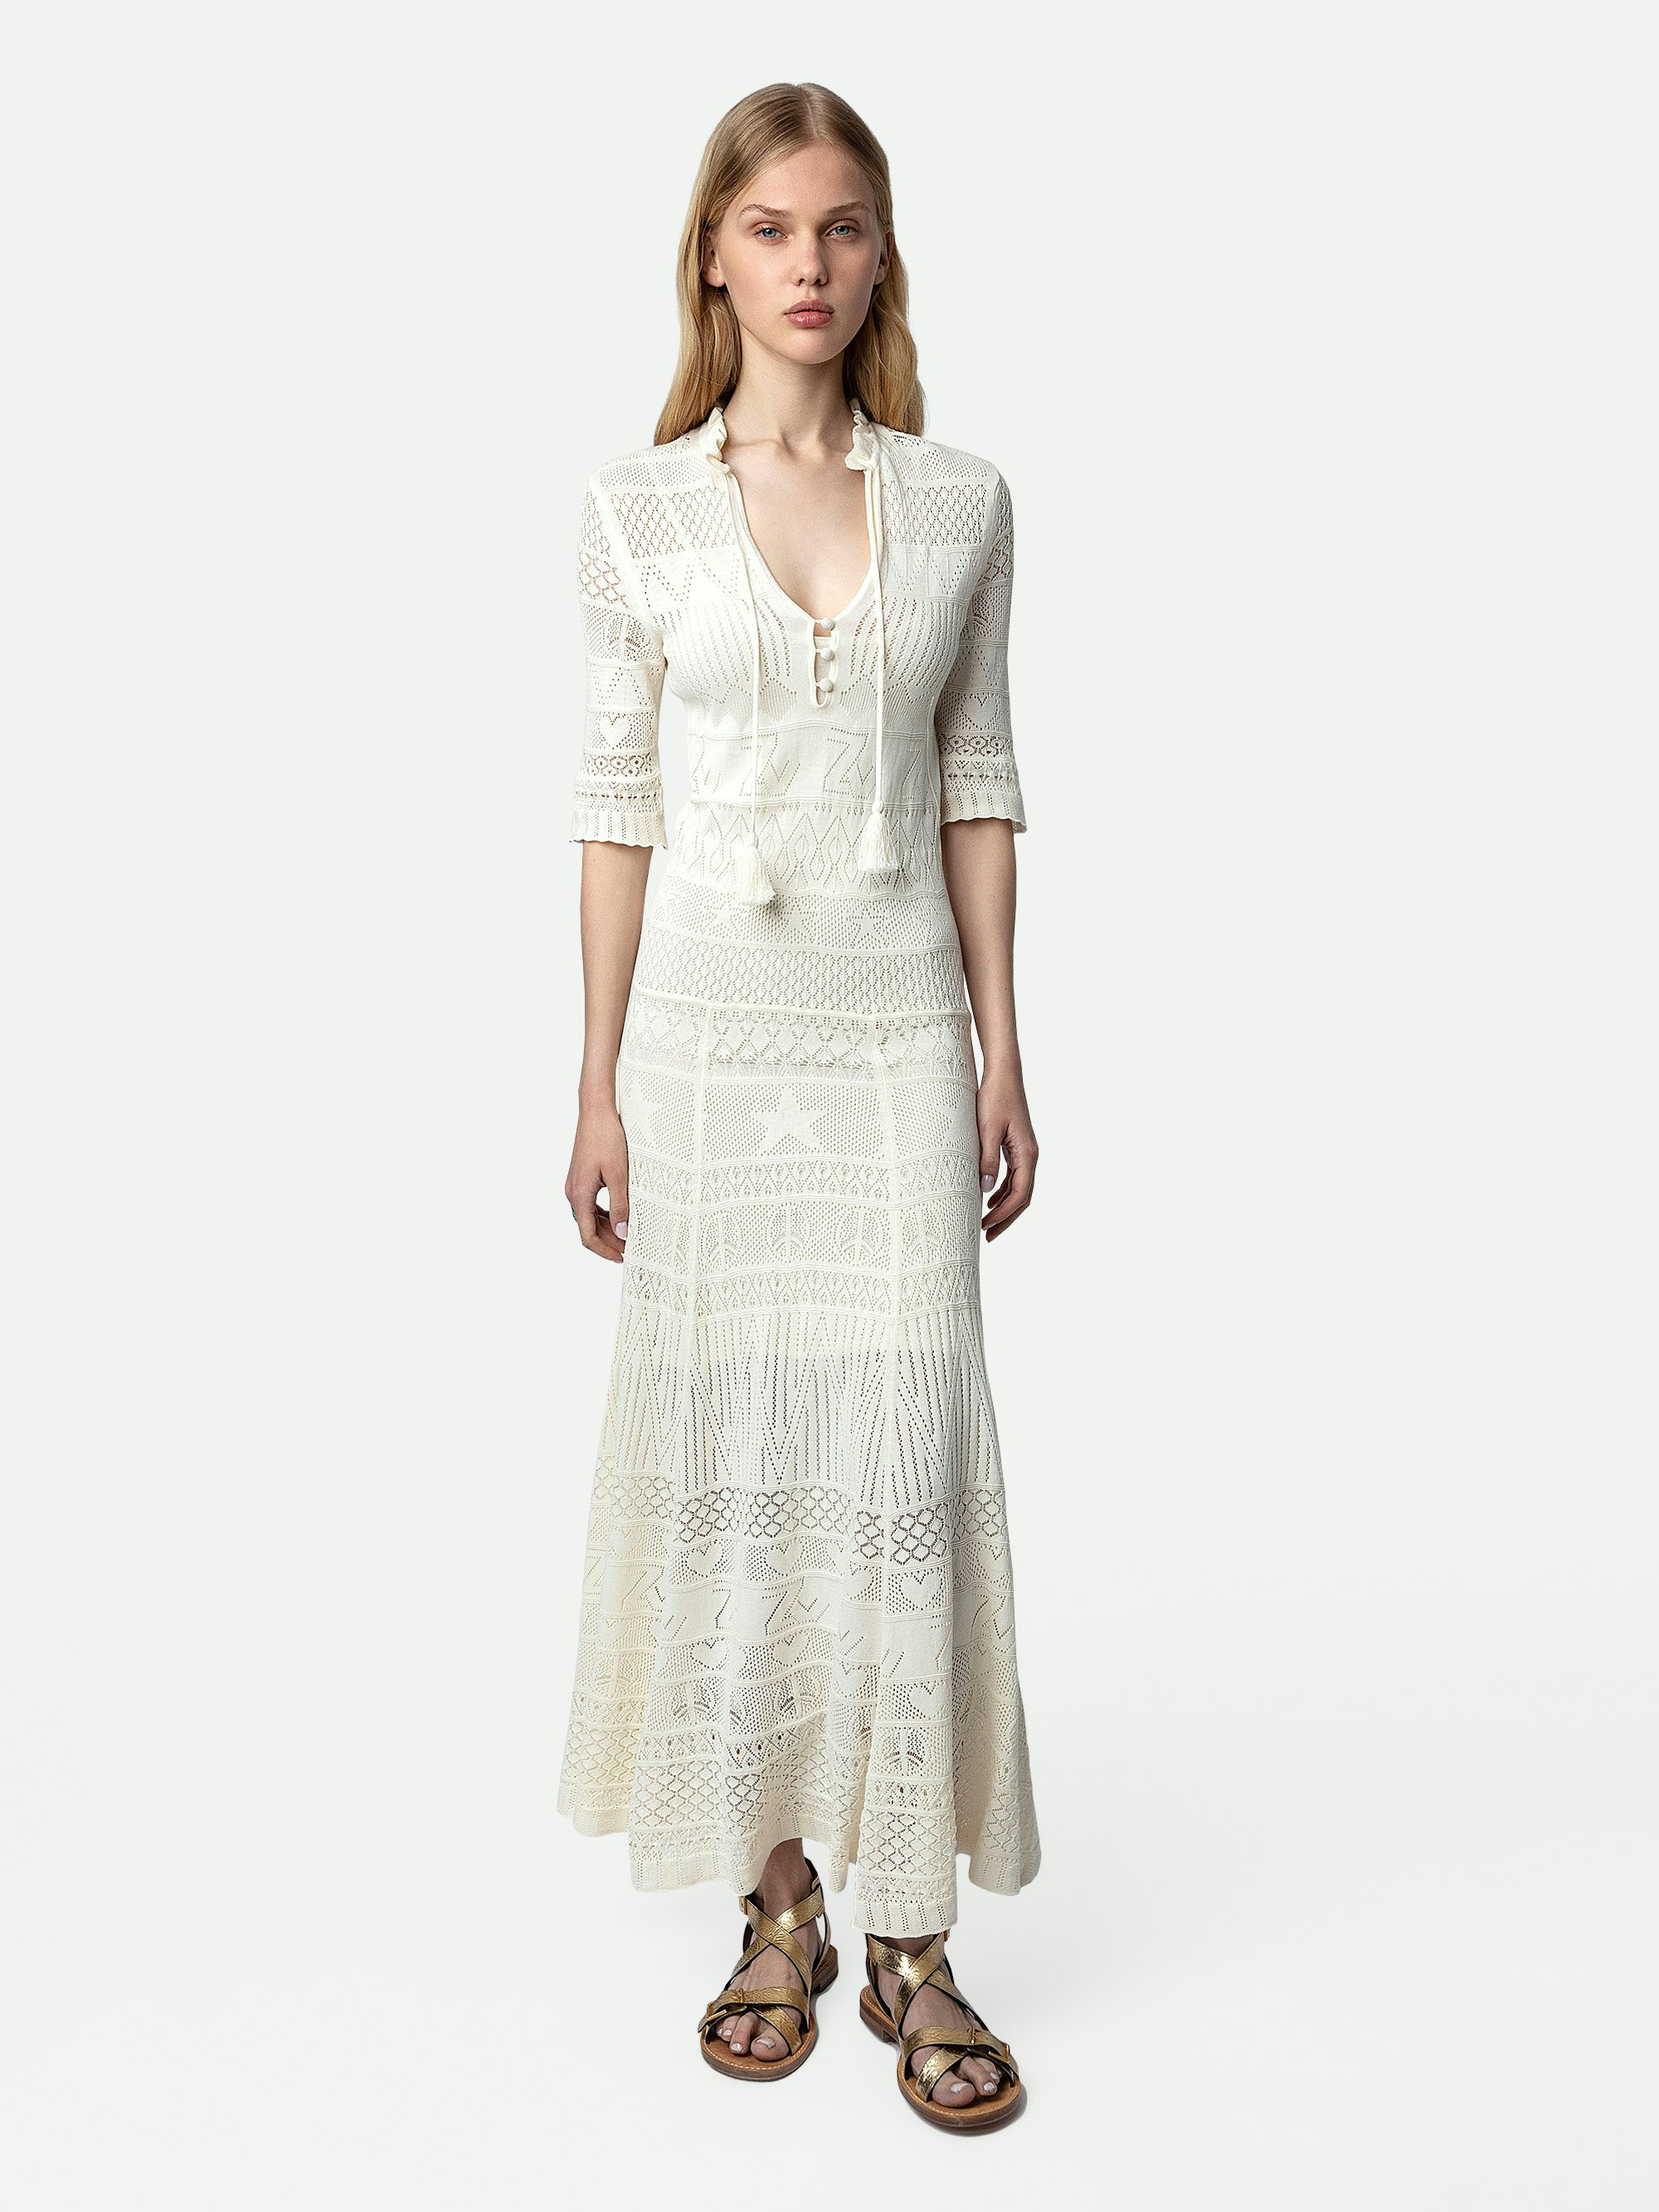 Memphis Dress - Women's long pointelle off-white cotton crochet dress with tassel ties